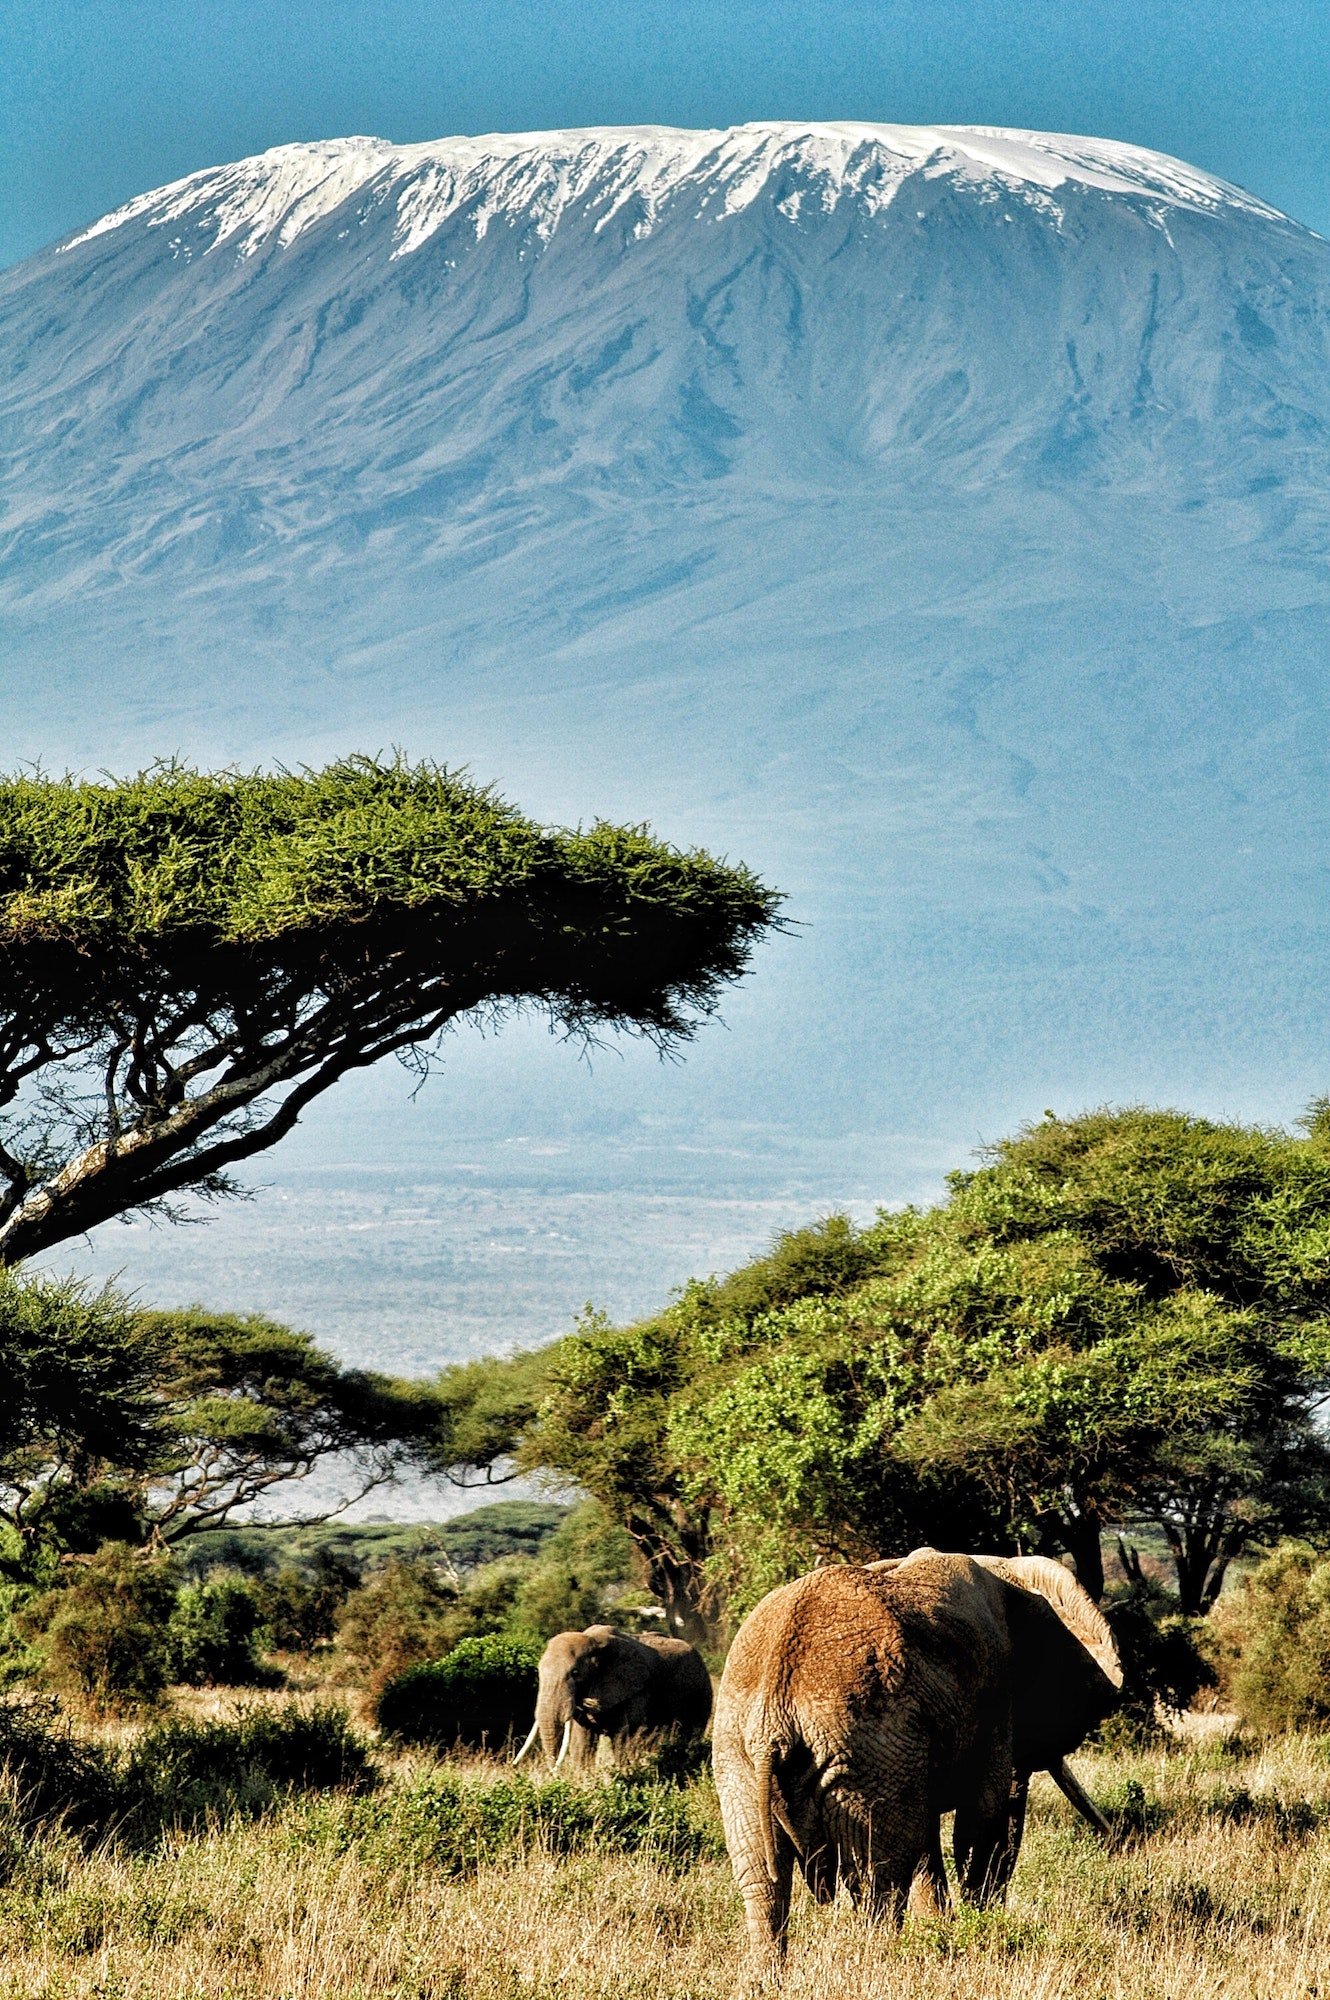 Elephants in front of Mount Kilimanjaro, Tanzania, East African Destinations - African Adventure Hotspots